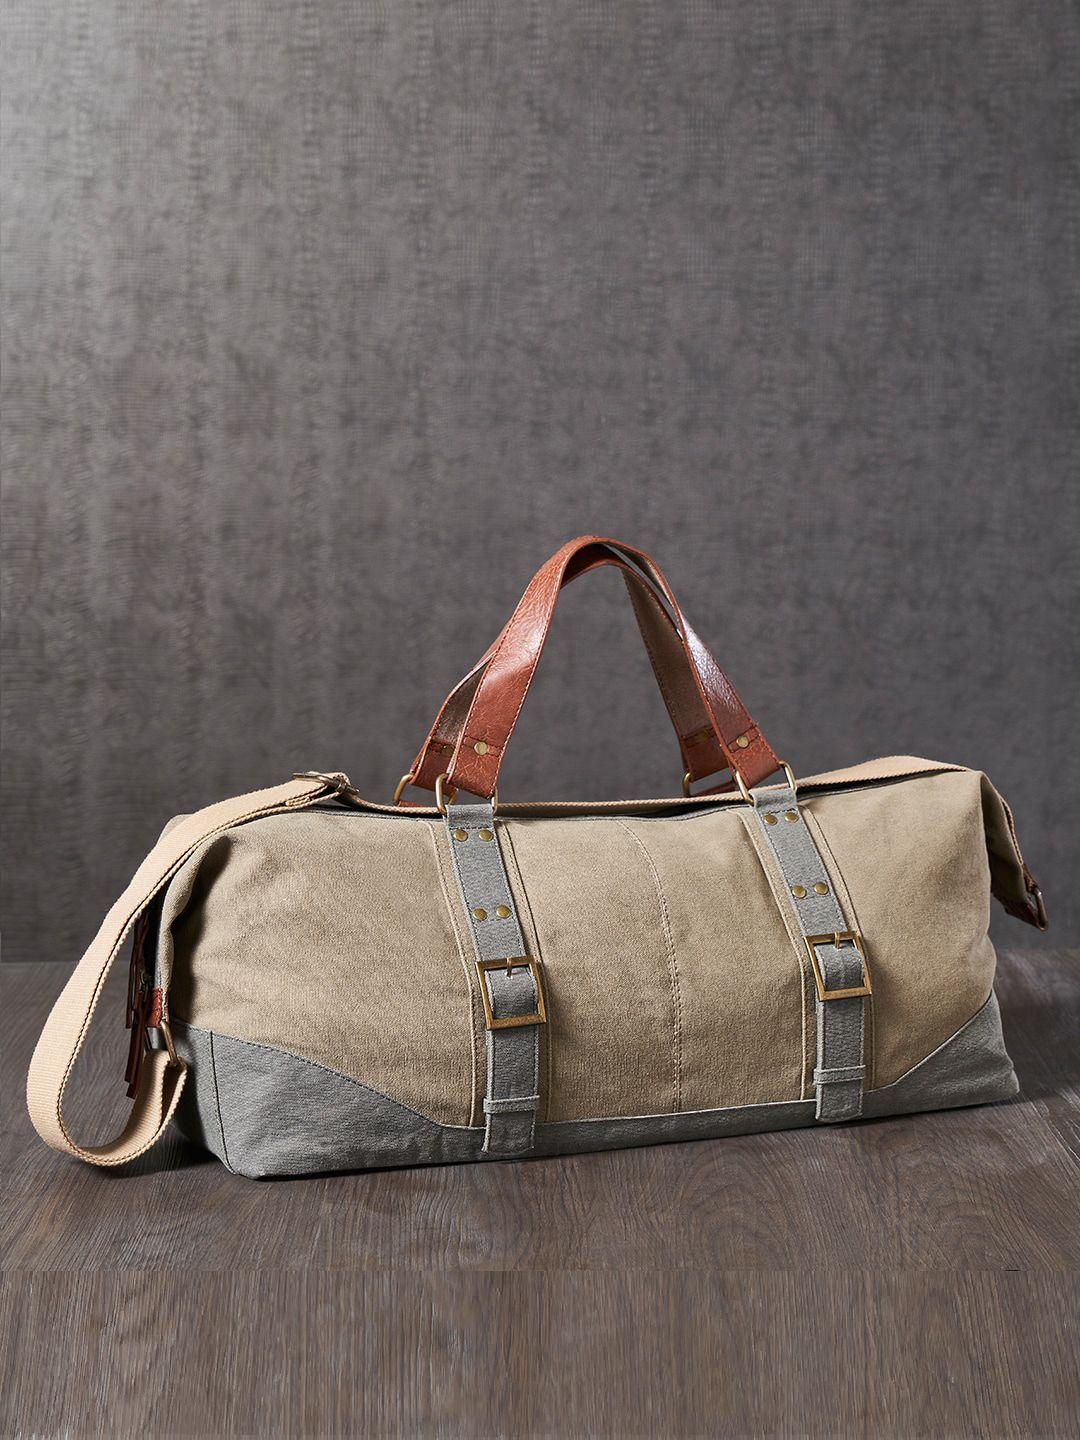 mona b brown cotton canvas travel bag with stylish design